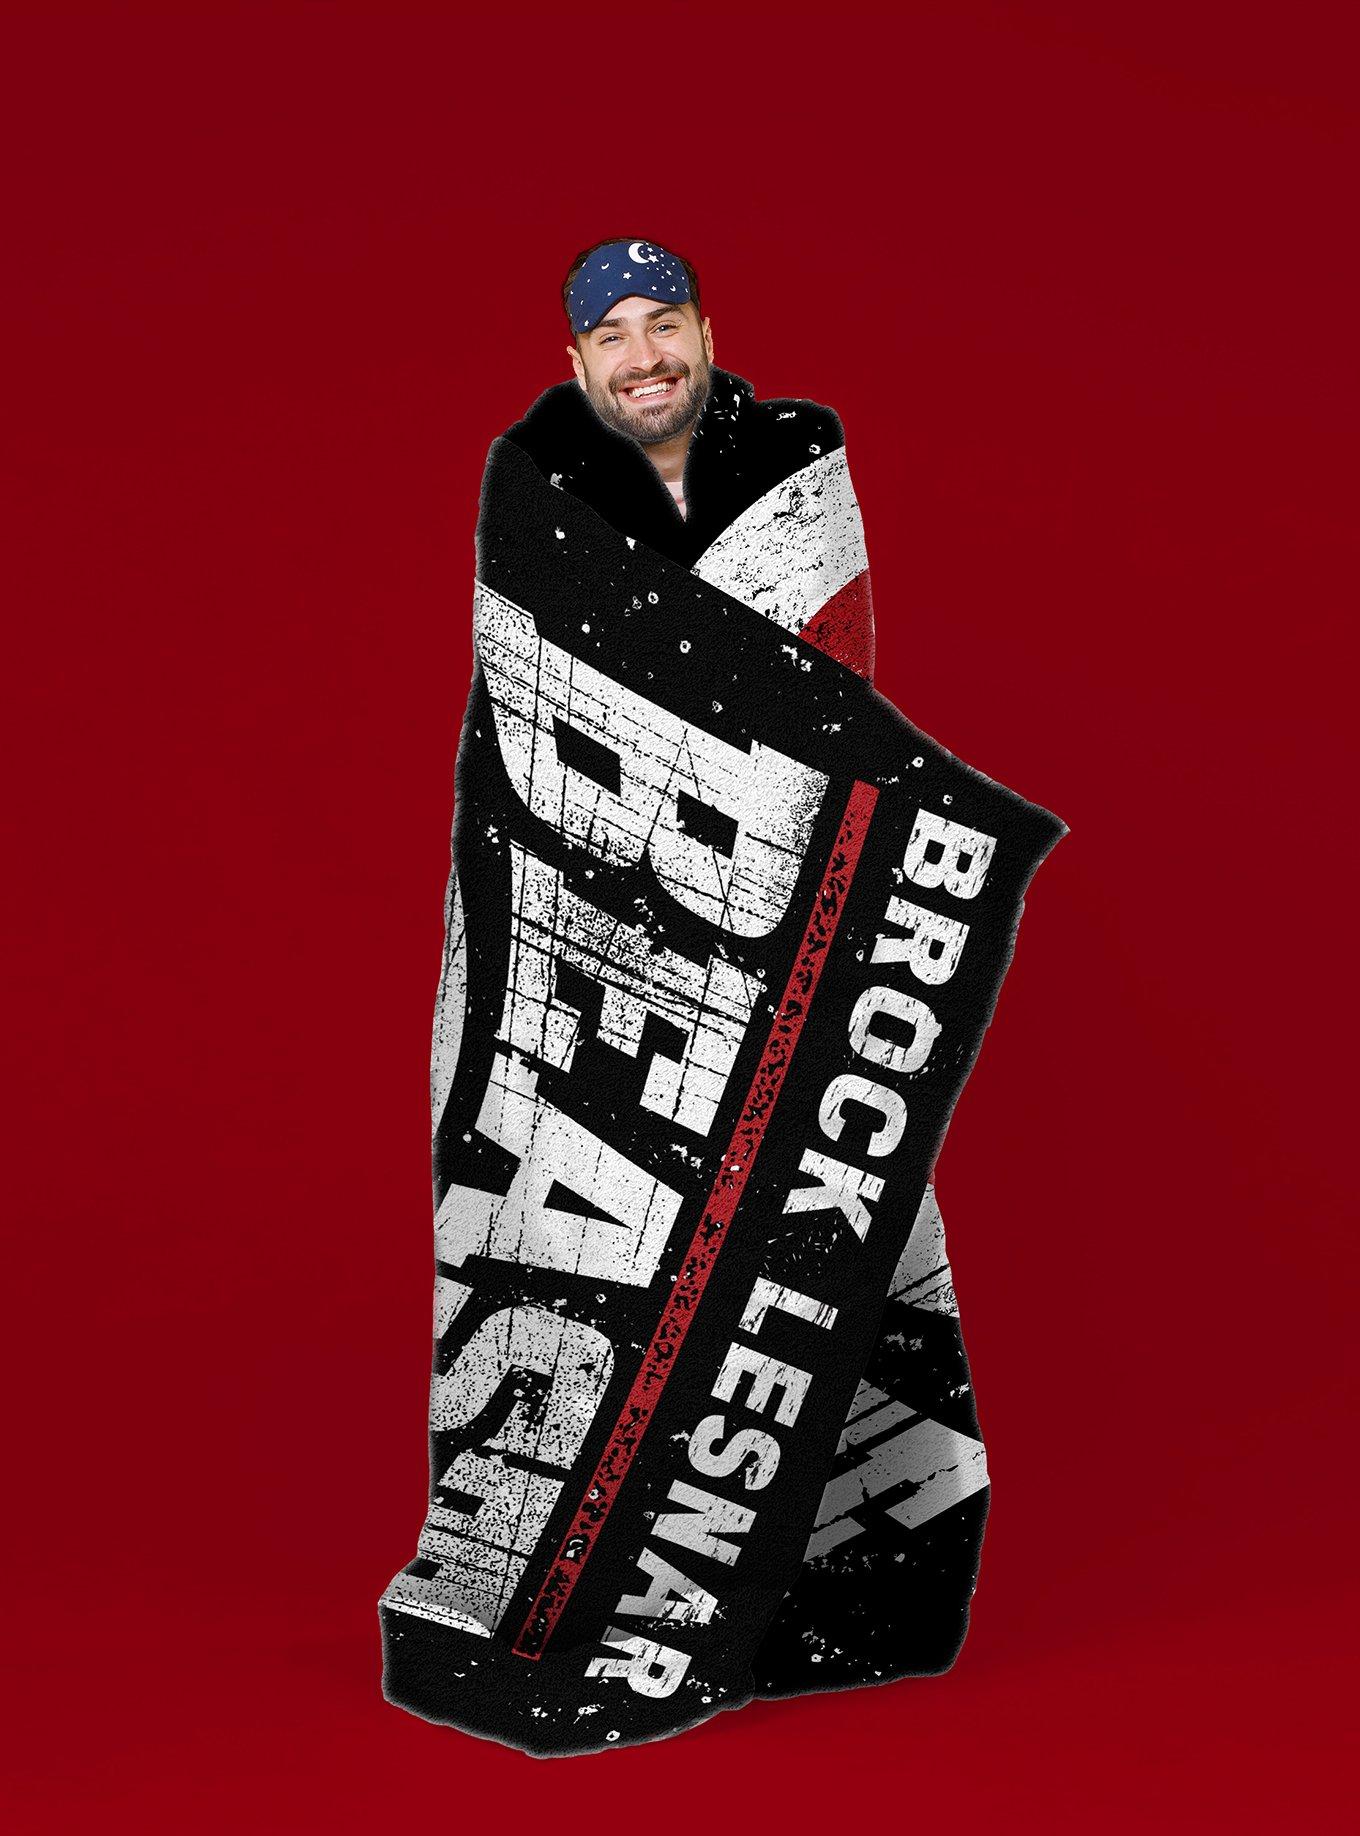 WWE Brock Lesnar Raschel Throw Blanket, , alternate